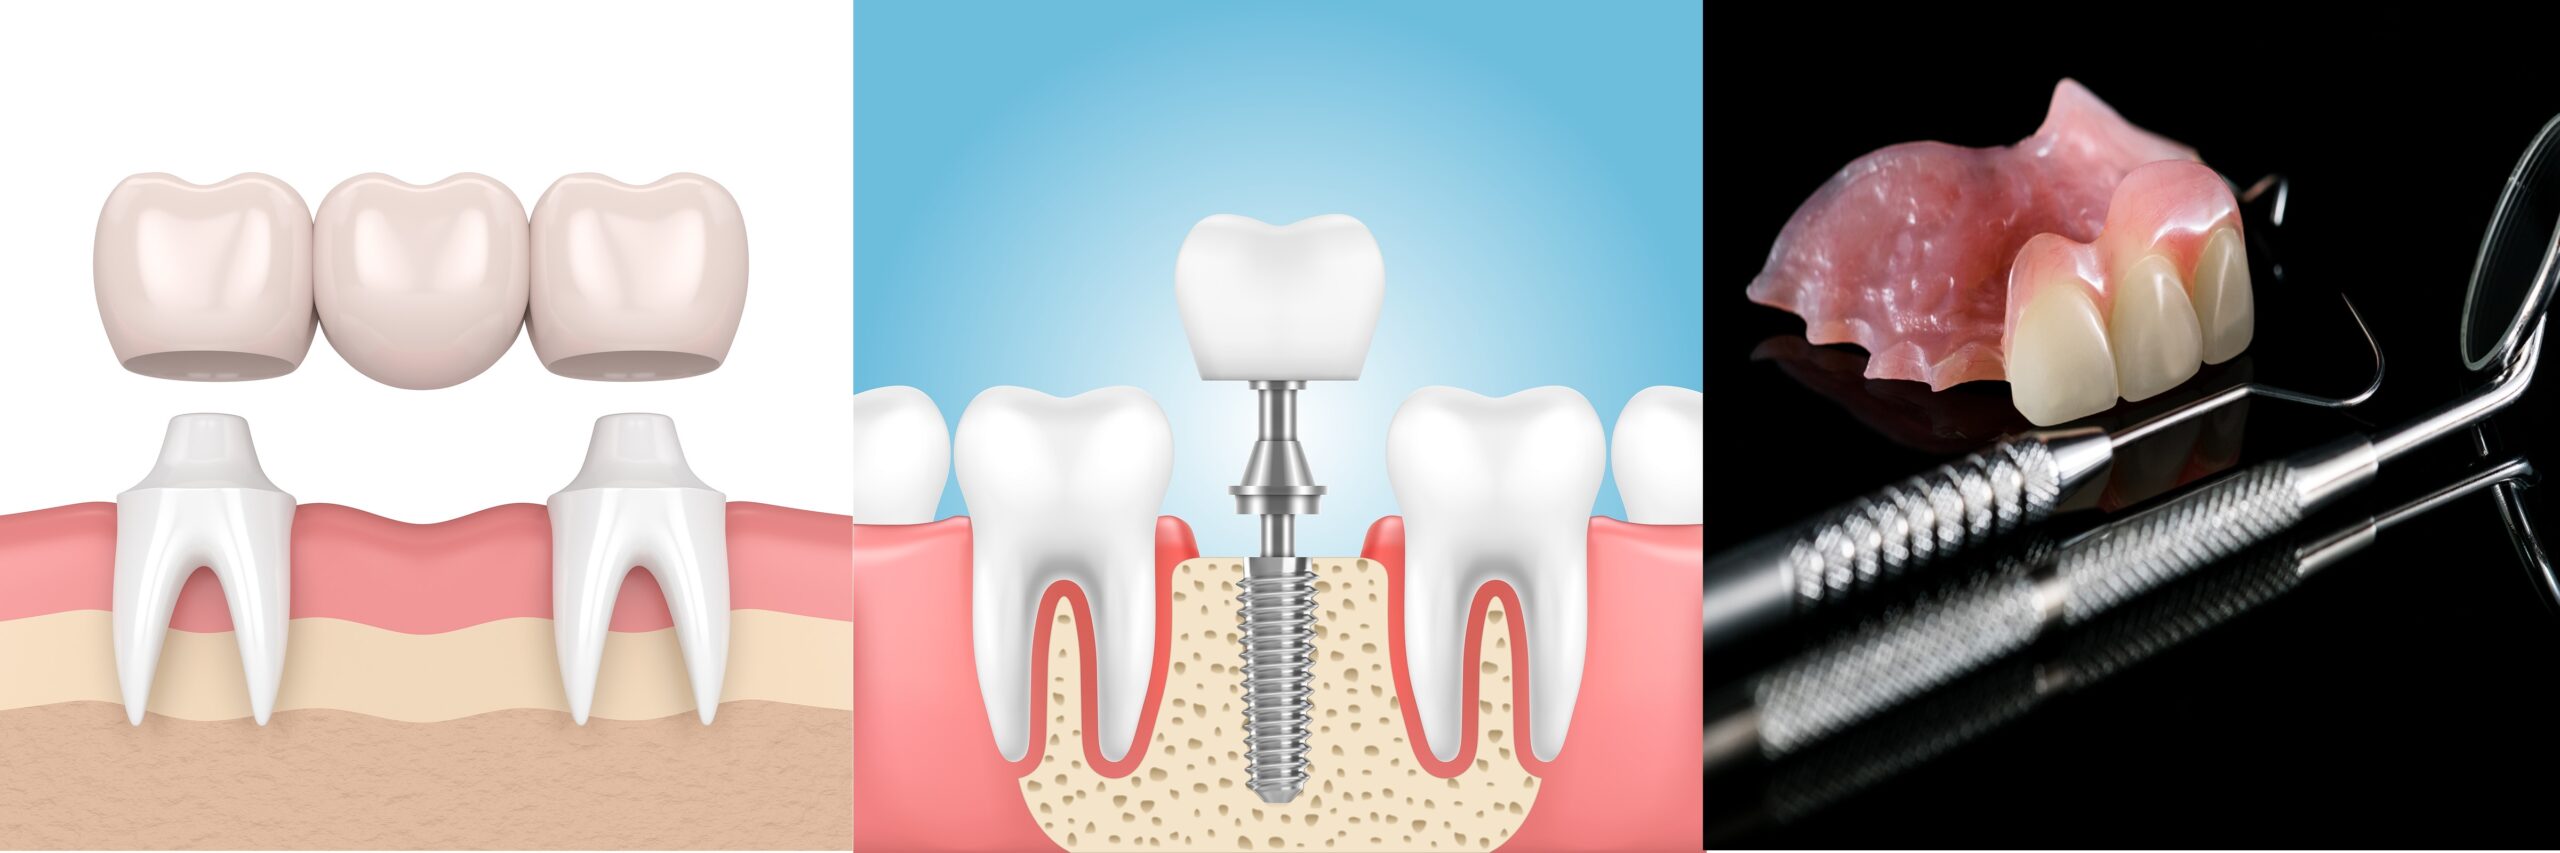 dental-implant-bridge-or-dentures